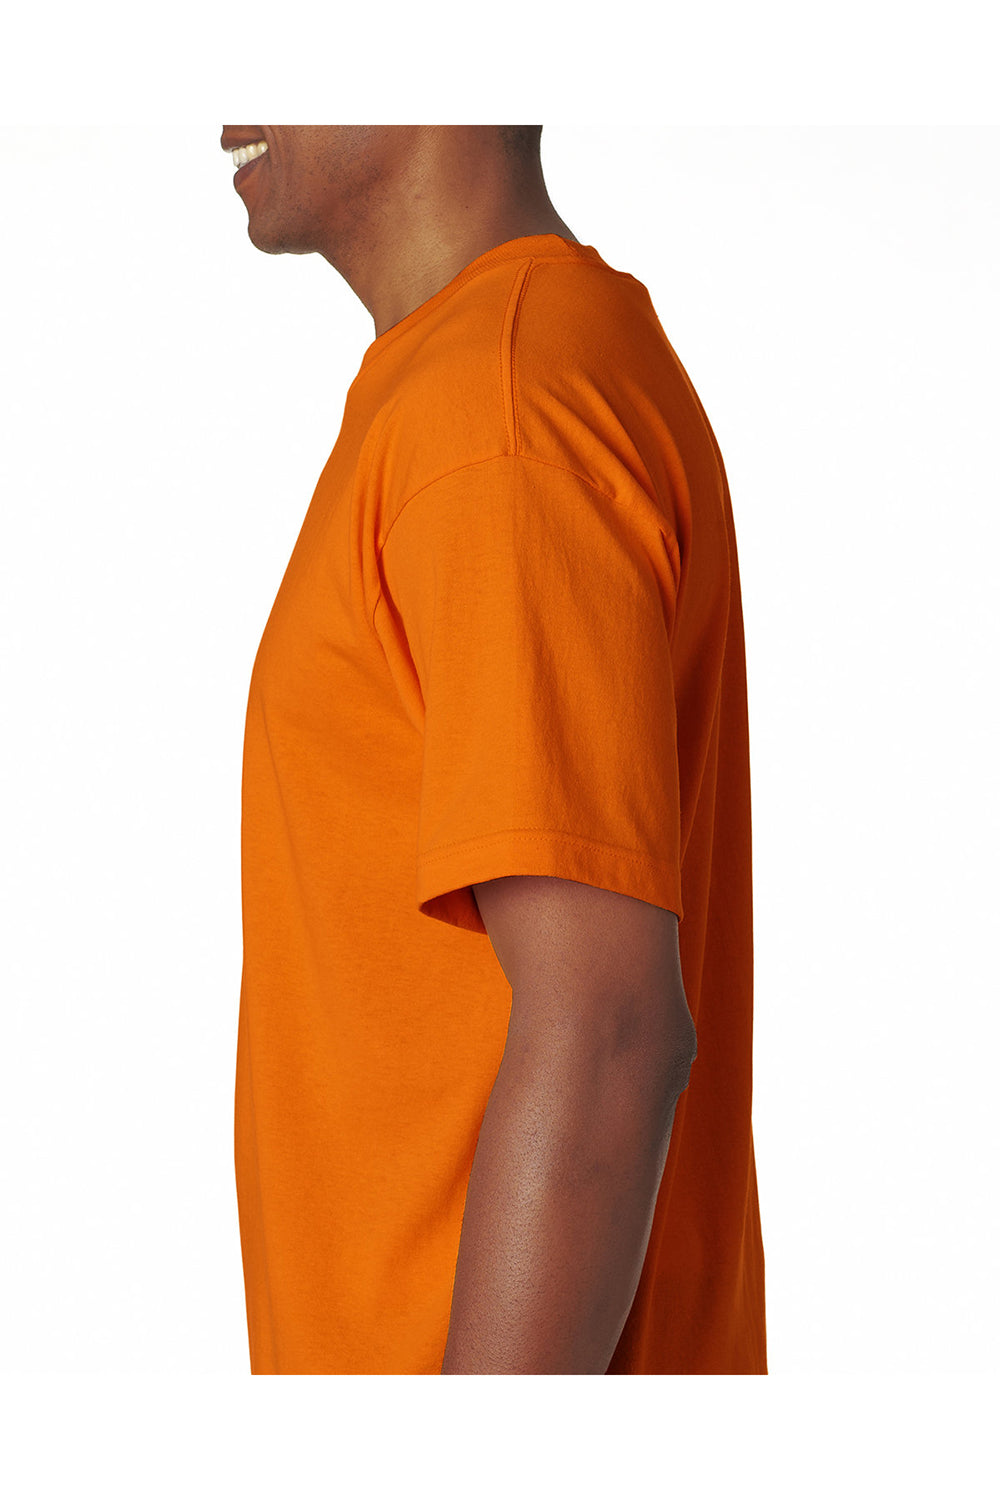 Bayside BA5100 Mens USA Made Short Sleeve Crewneck T-Shirt Bright Orange Model Side